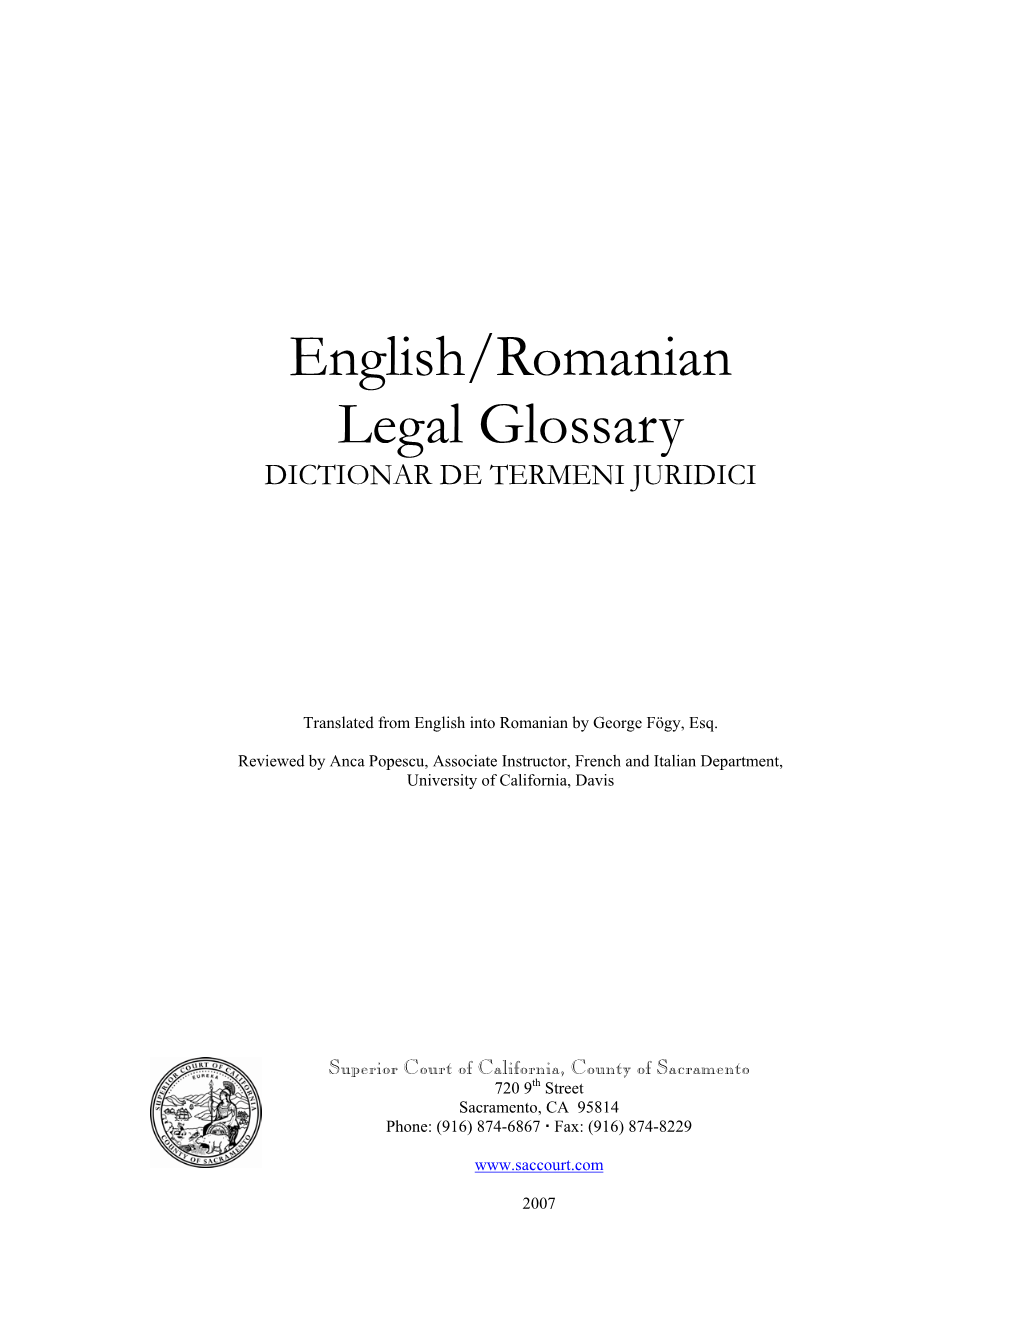 English/Romanian Legal Glossary DICTIONAR DE TERMENI JURIDICI